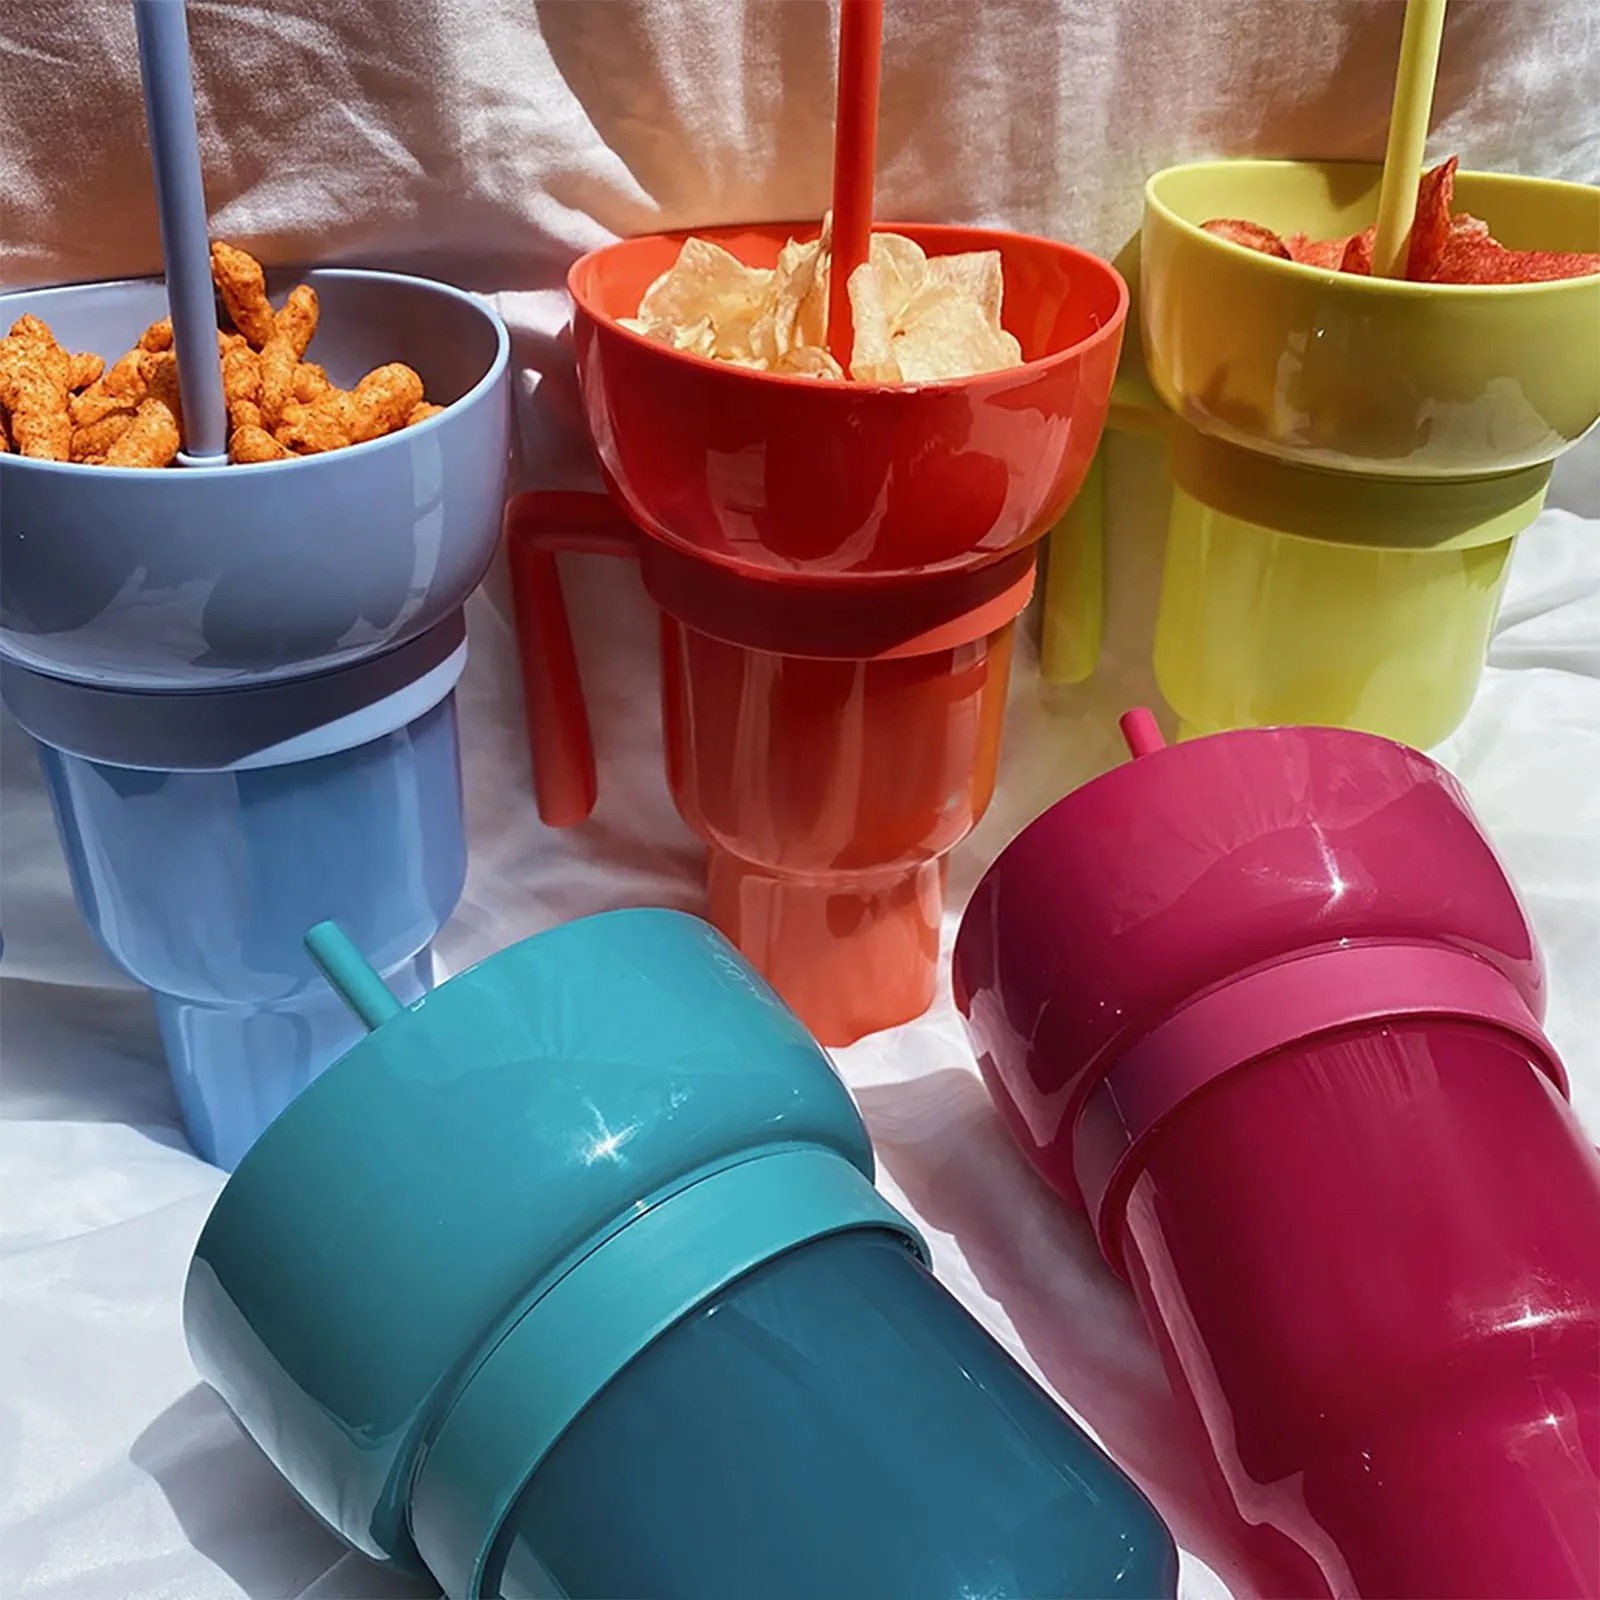 https://ae01.alicdn.com/kf/S9eef167276054d81adf489f43549e791m/Snackies-Cups-2-In-1-Snack-Bowl-On-Drink-Cup-Splash-Proof-Leakproof-Portable-Snack-Cup.jpg